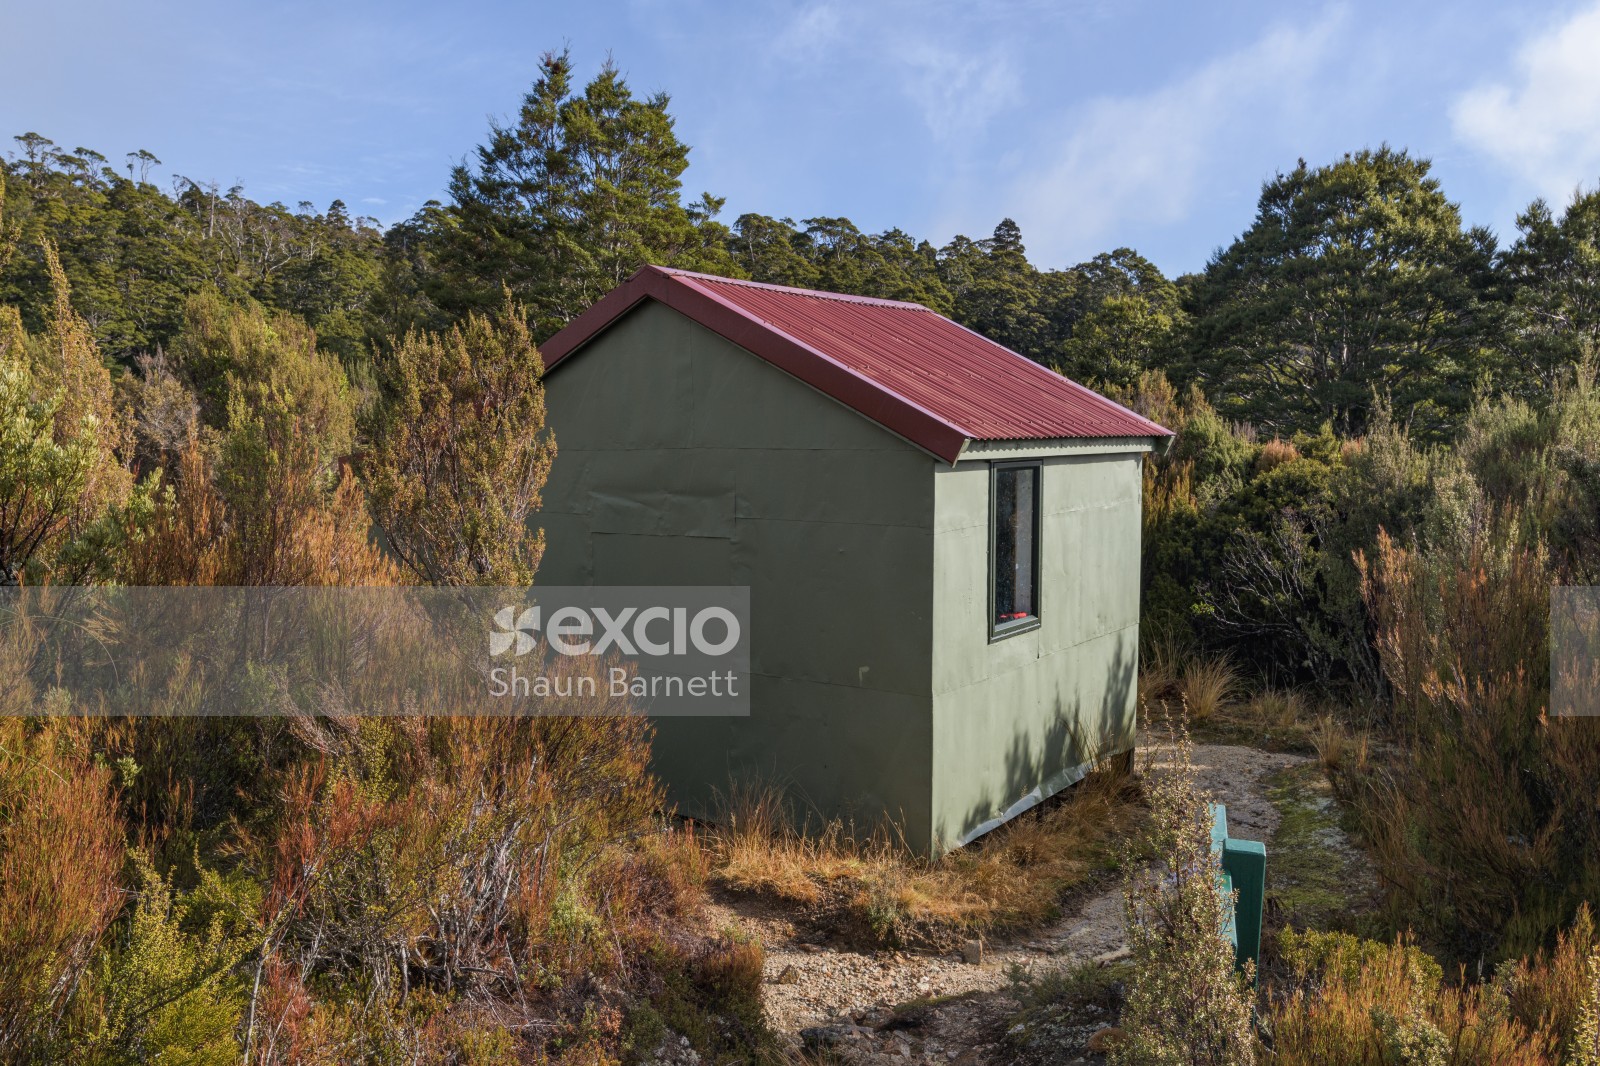 Moa Park Shelter, Abel Tasman